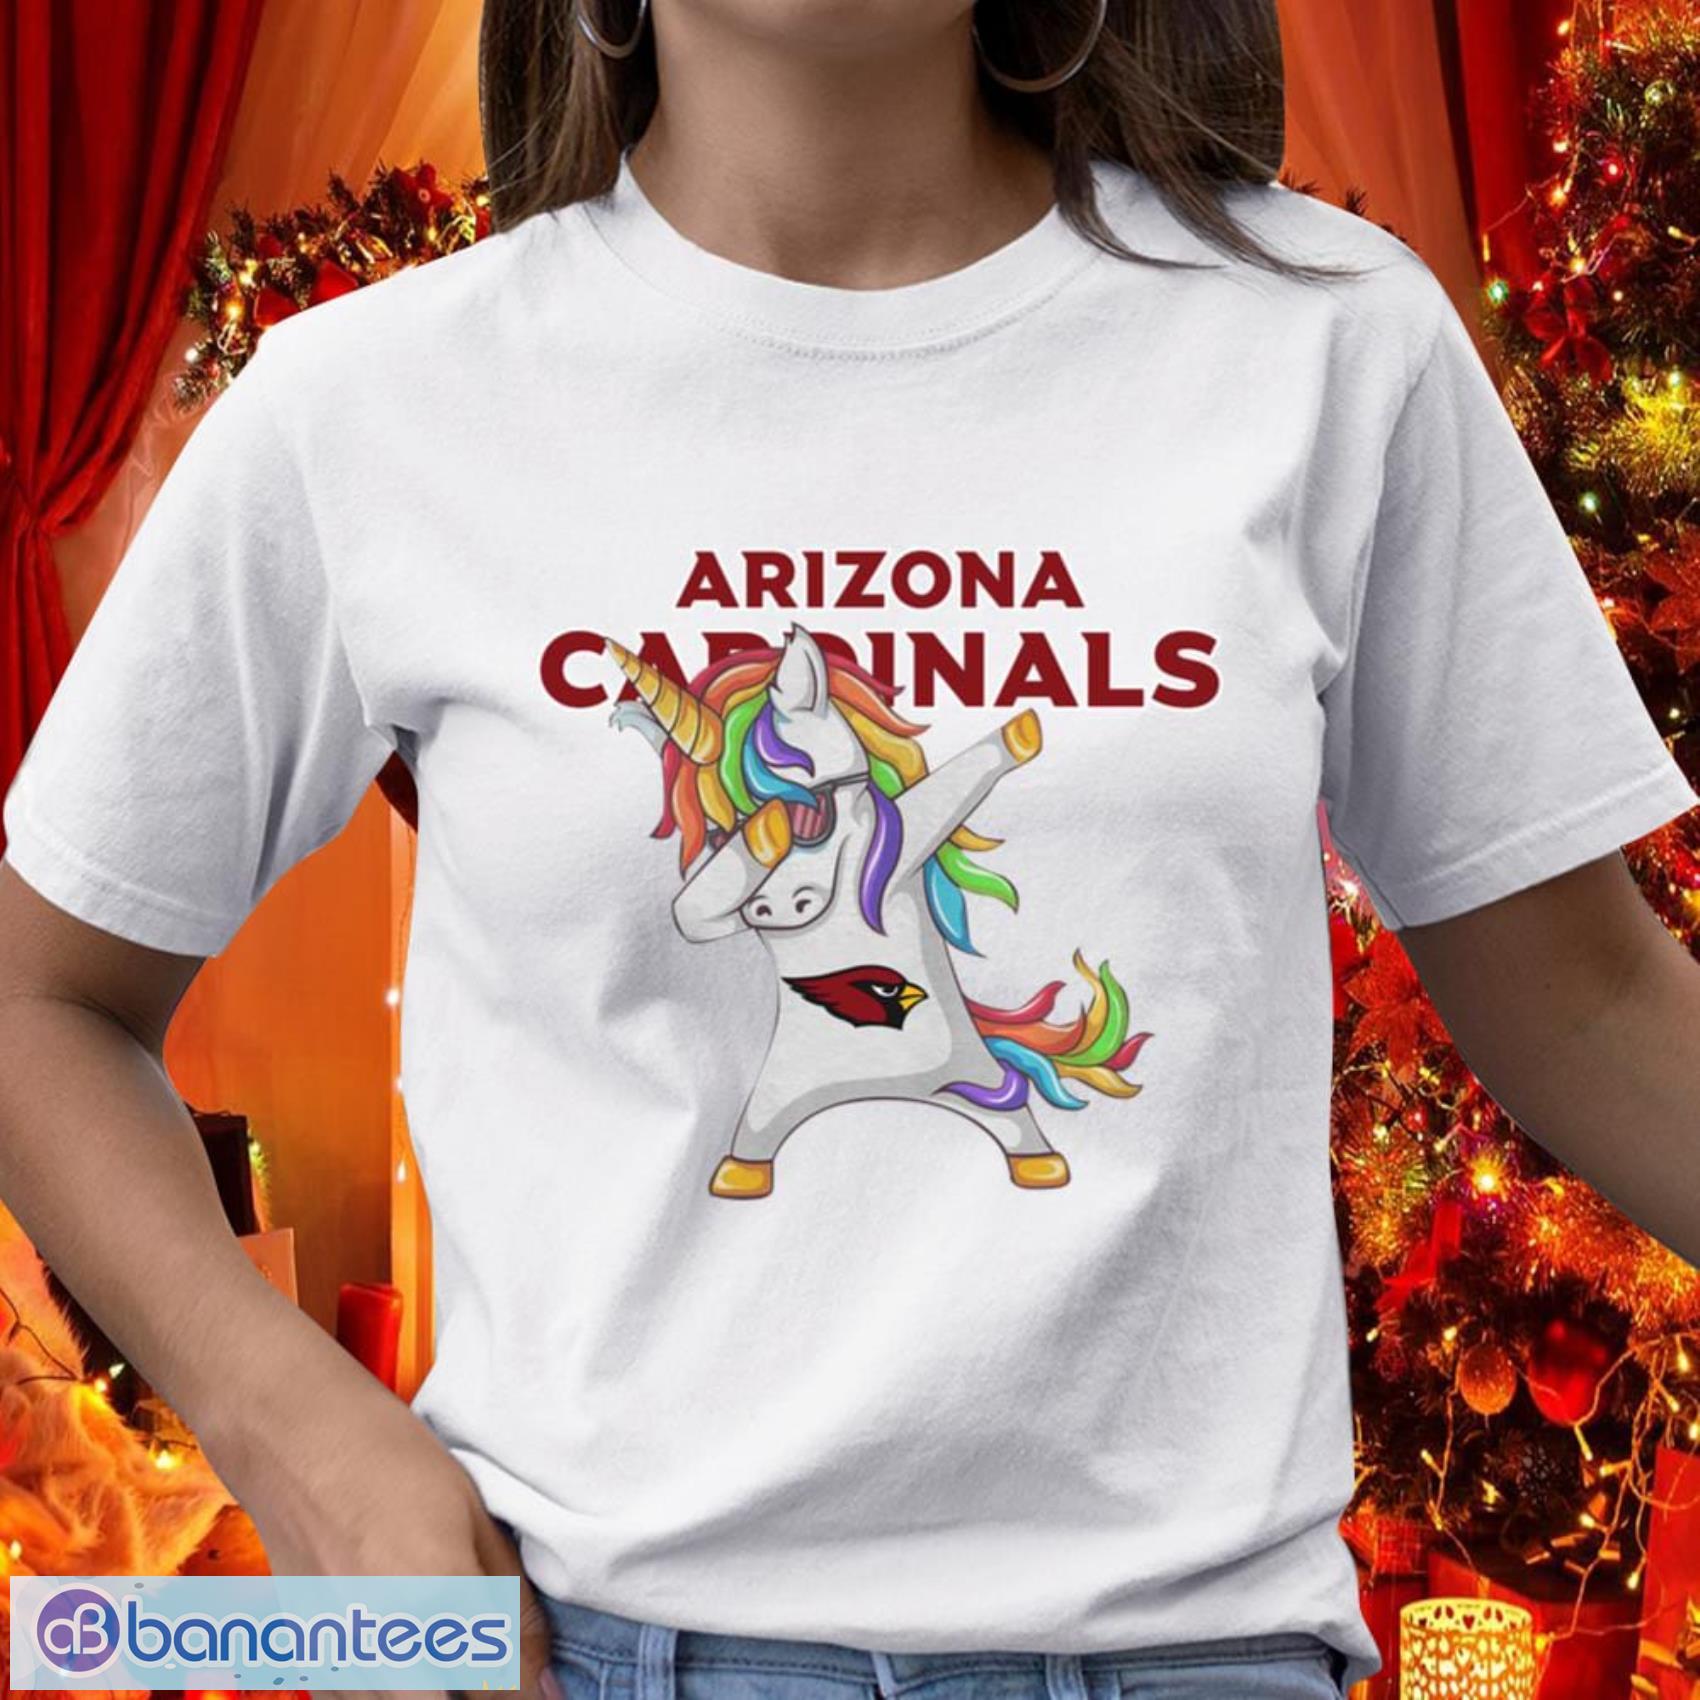 Arizona Cardinals NFL Football Gift Fr Fans Funny Unicorn Dabbing Sports T Shirt - Arizona Cardinals NFL Football Funny Unicorn Dabbing Sports T Shirt_1